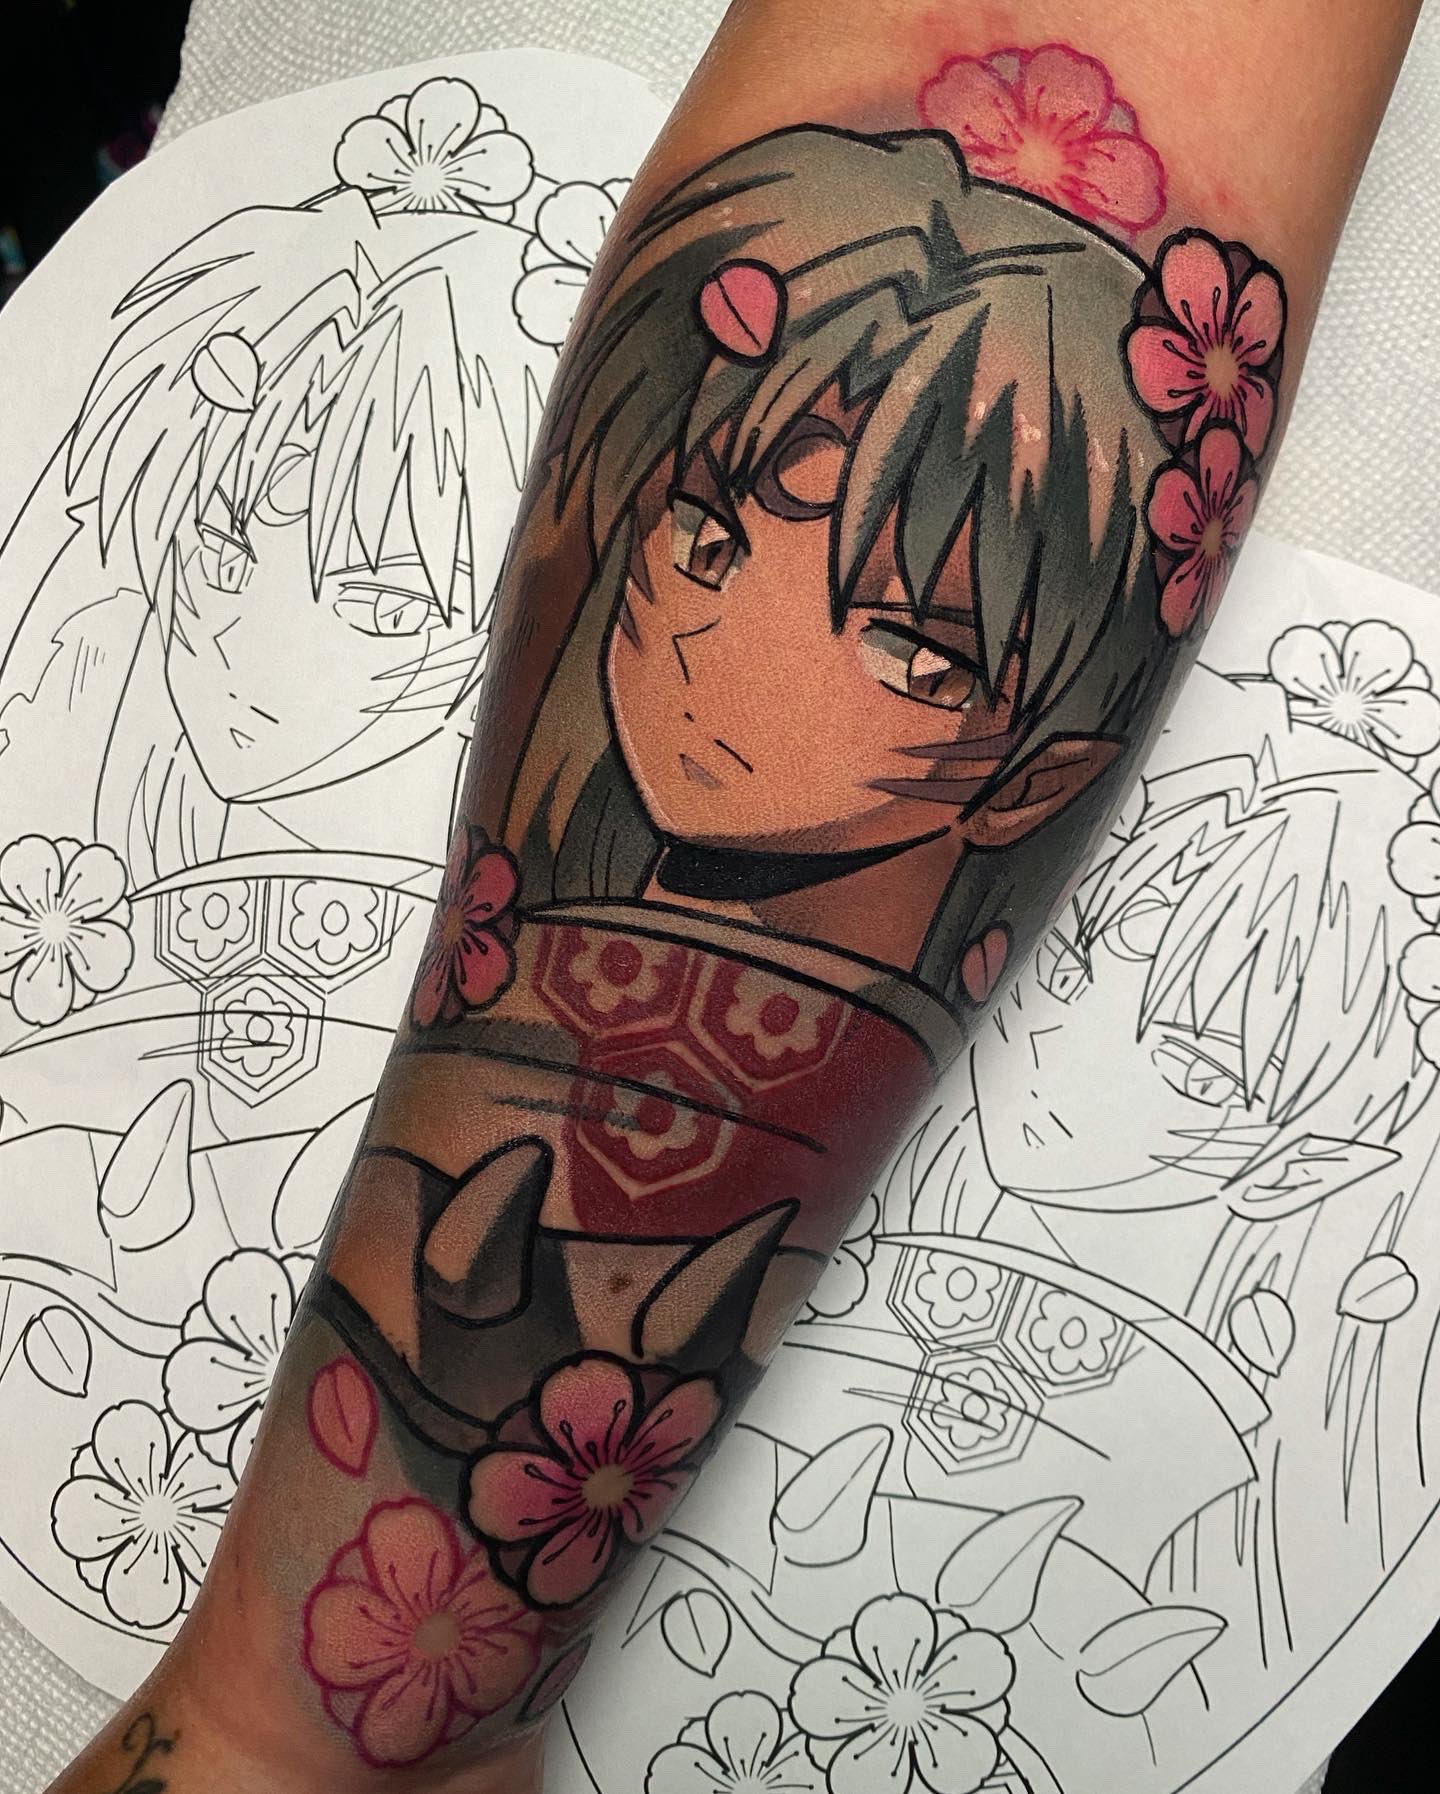 Fakku  on Twitter Work in progress Inuyasha tattoo I had the chance  to start  tattoo today  httpstcoUmHunaKNMX  Twitter